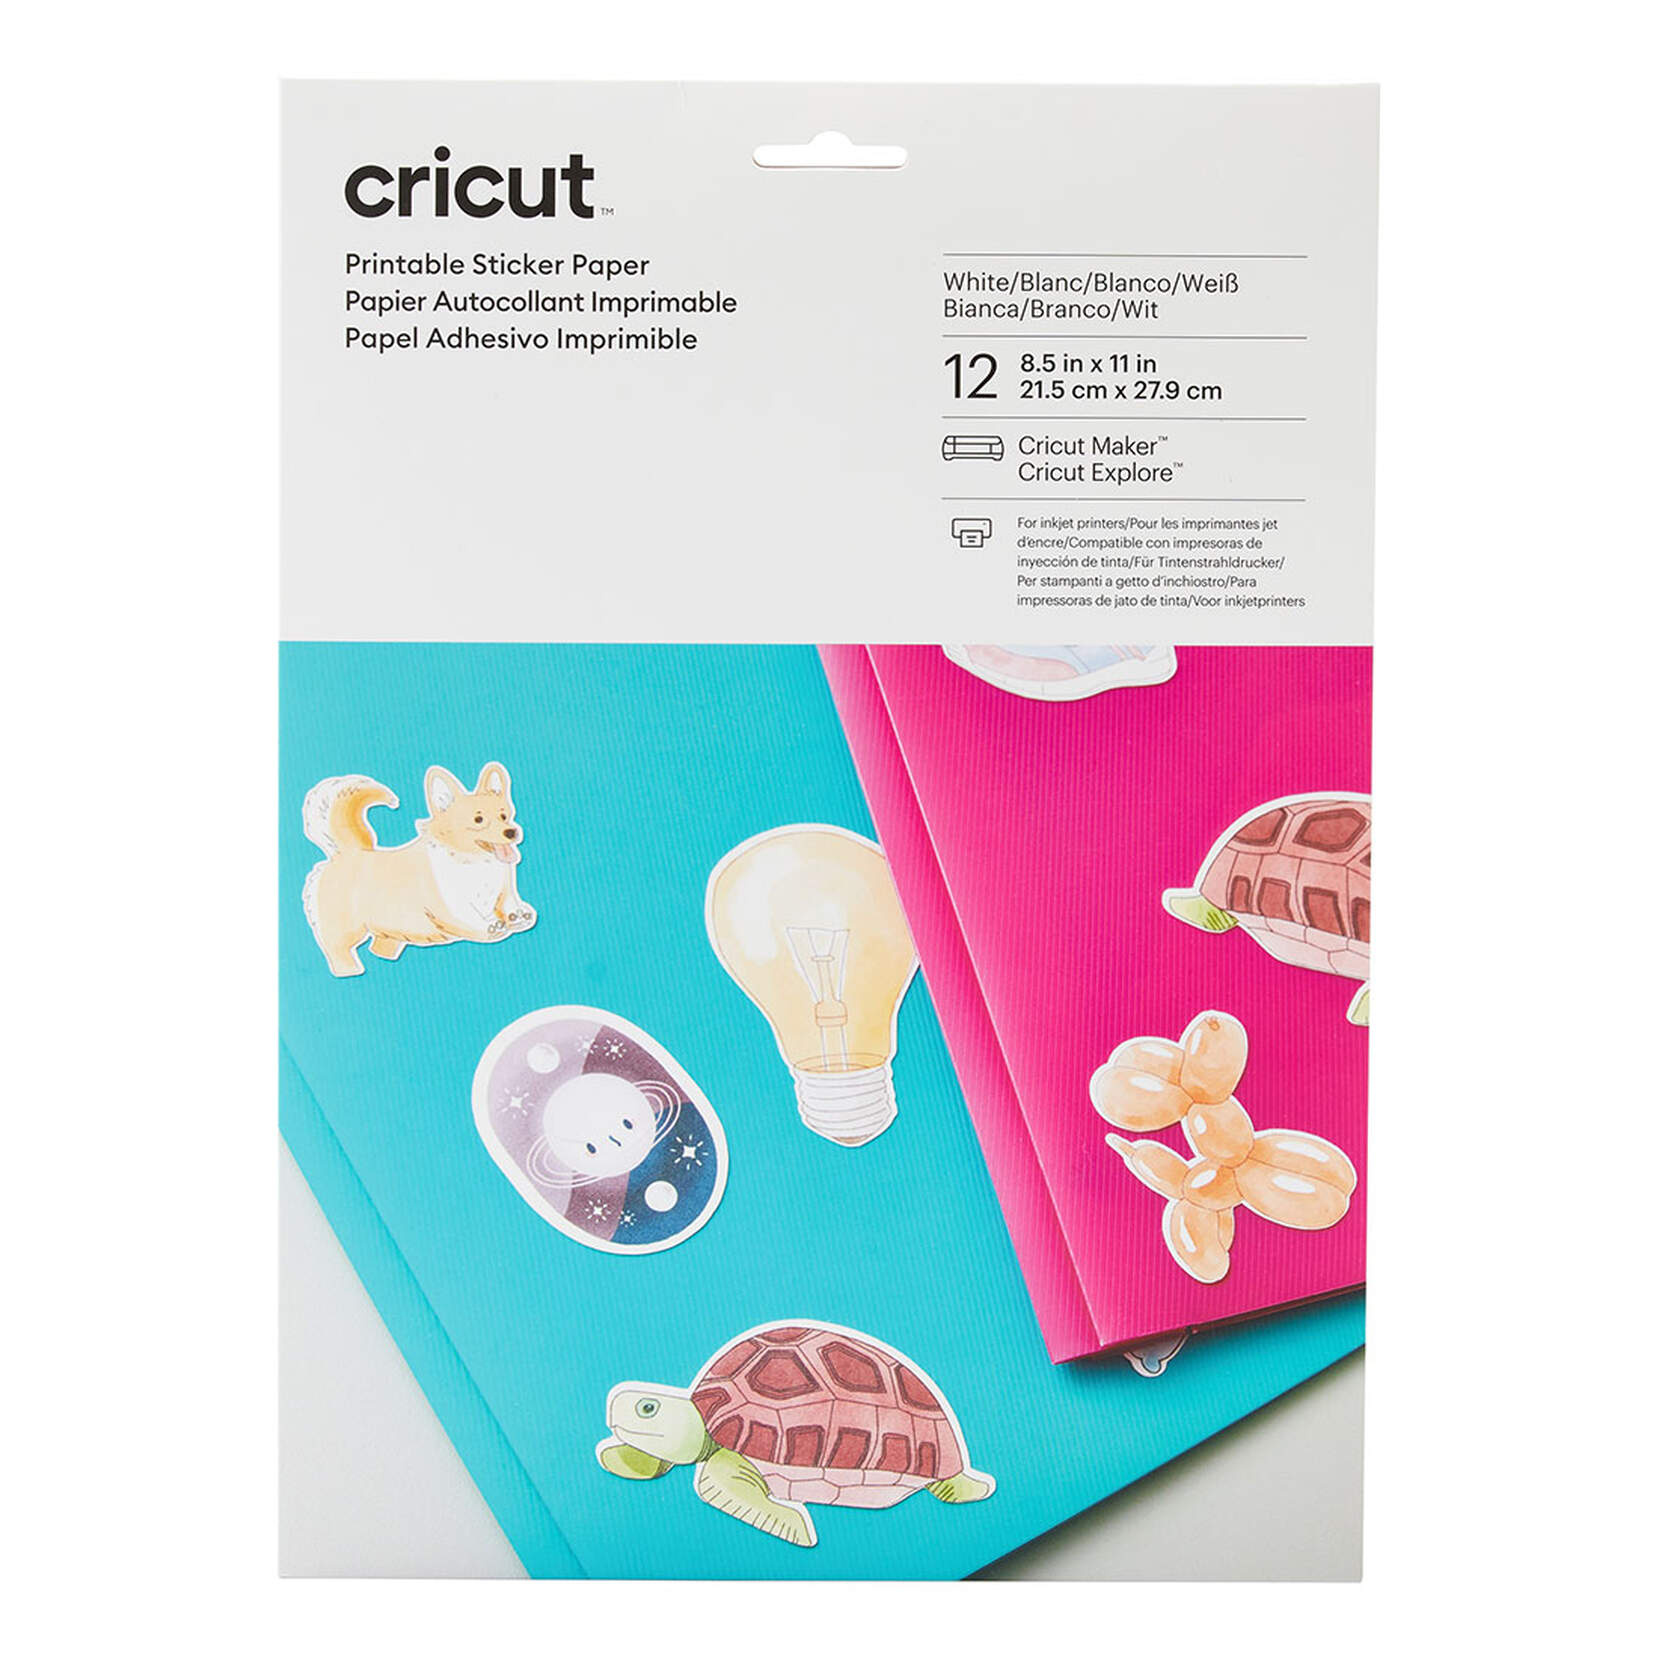 cricut-printable-sticker-paper-21-5-cm-x-28-cm-12-sheets-rato-education